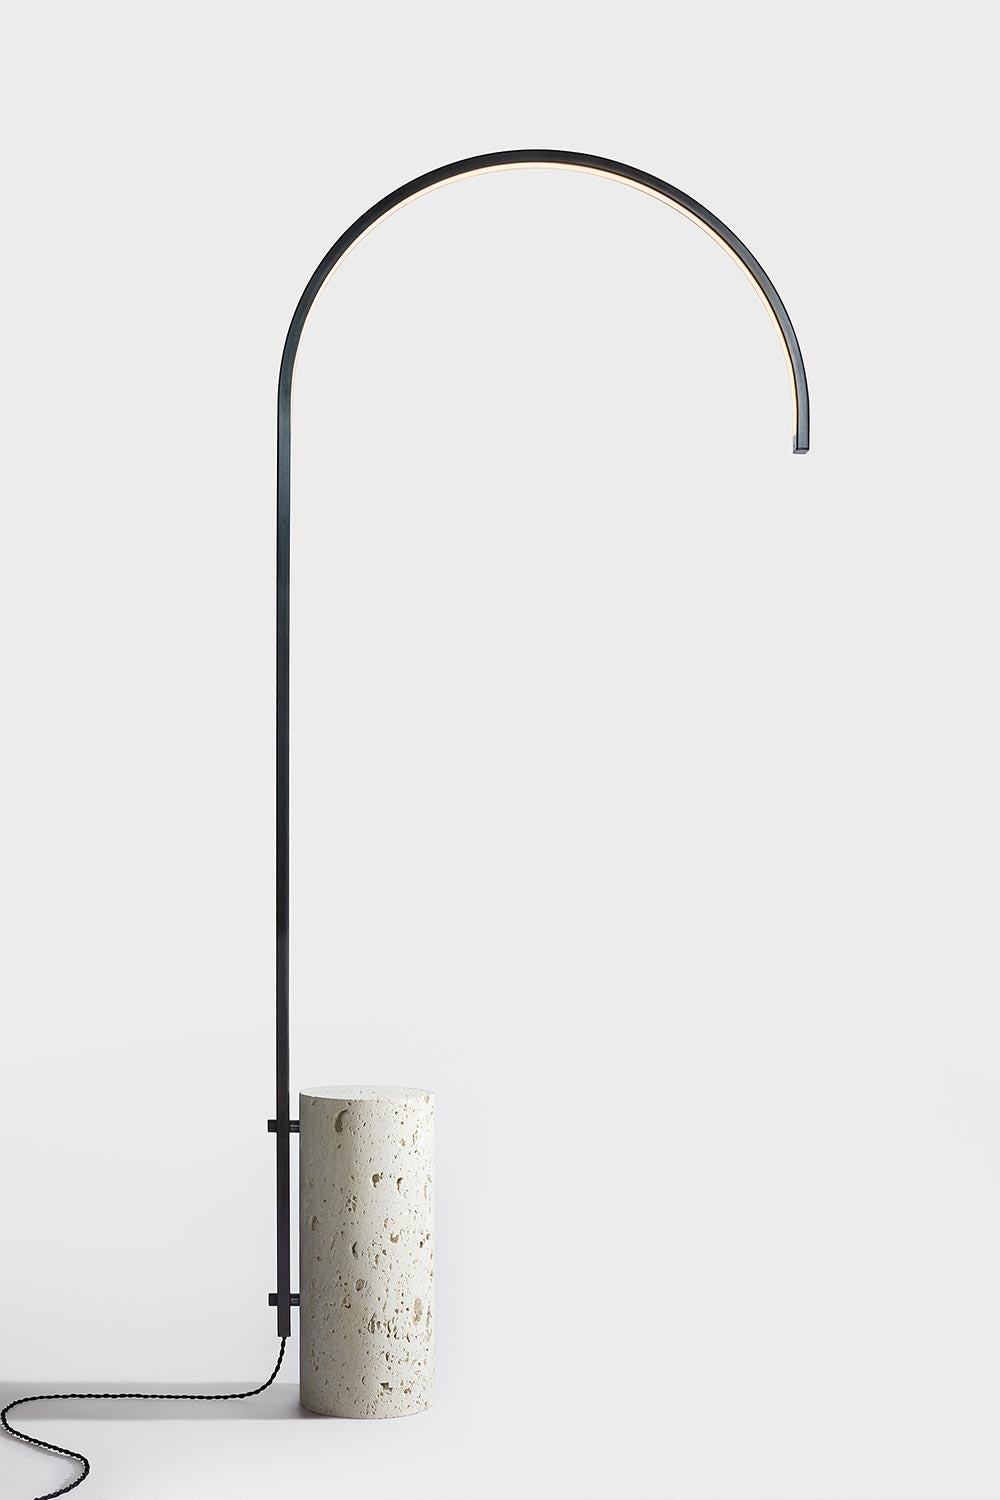 Minimaliste Alexallen Studio, « Cane », lampadaire en vente